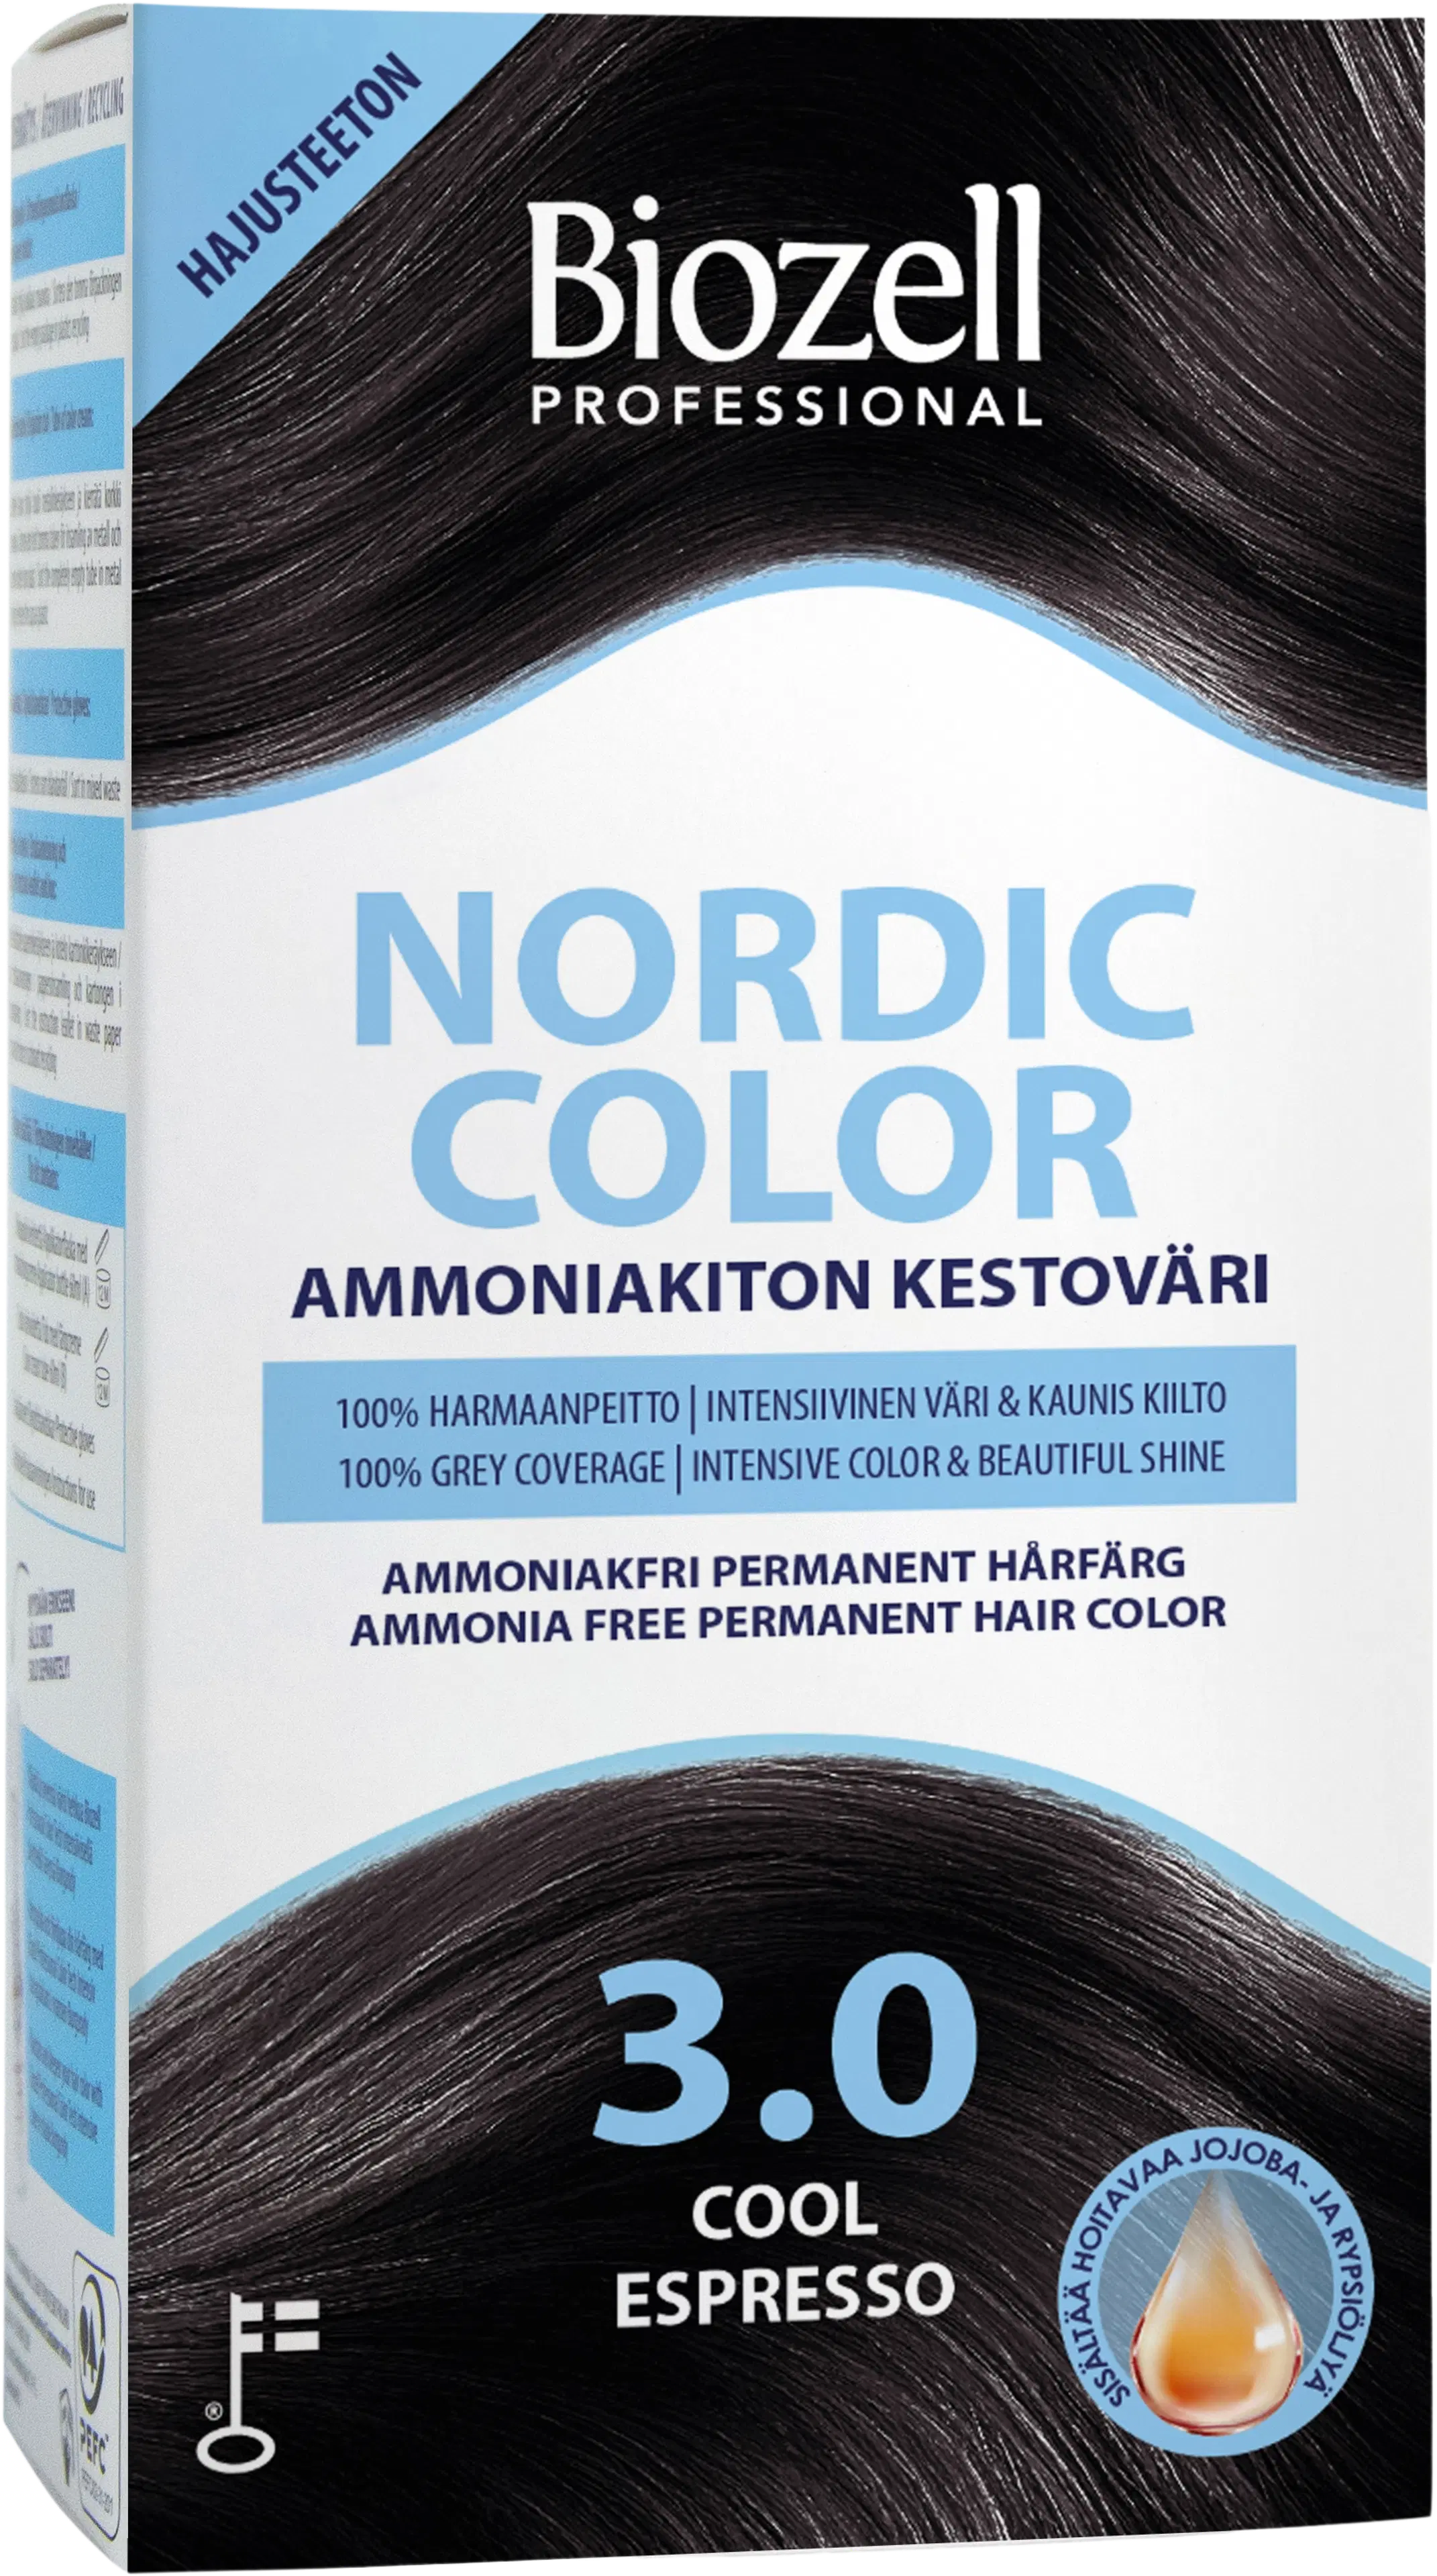 Biozell Professional Nordic Color ammoniakiton kestoväri Cool Espresso 3.0 2x60ml